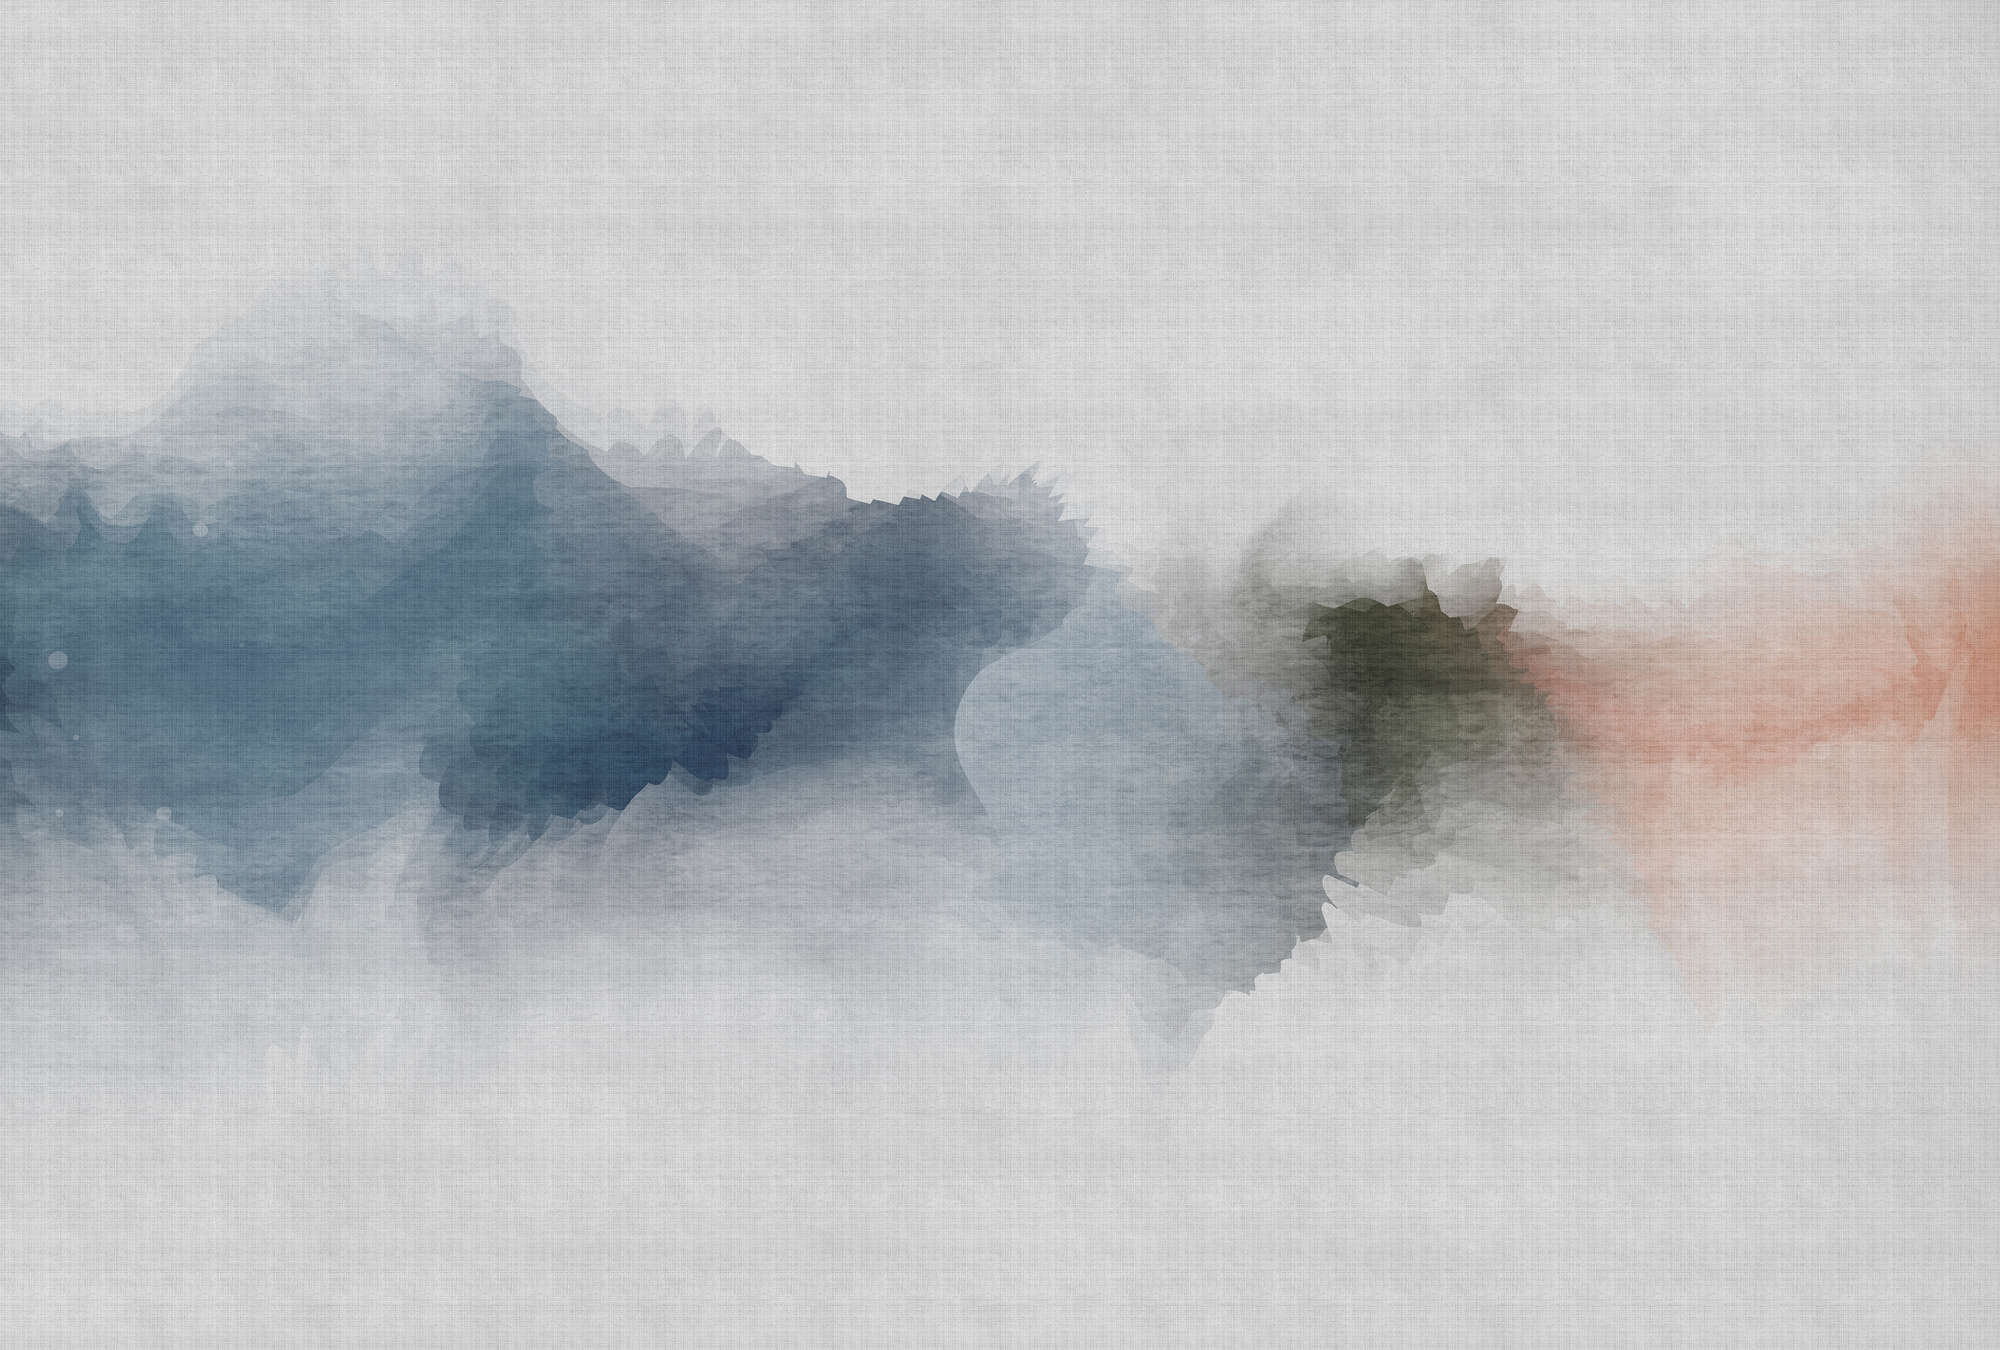             Daydream 1 - Papel Pintado Acuarela Minimalista - Textura Lino Natural - Gris, Naranja | Tejido sin tejer liso mate
        